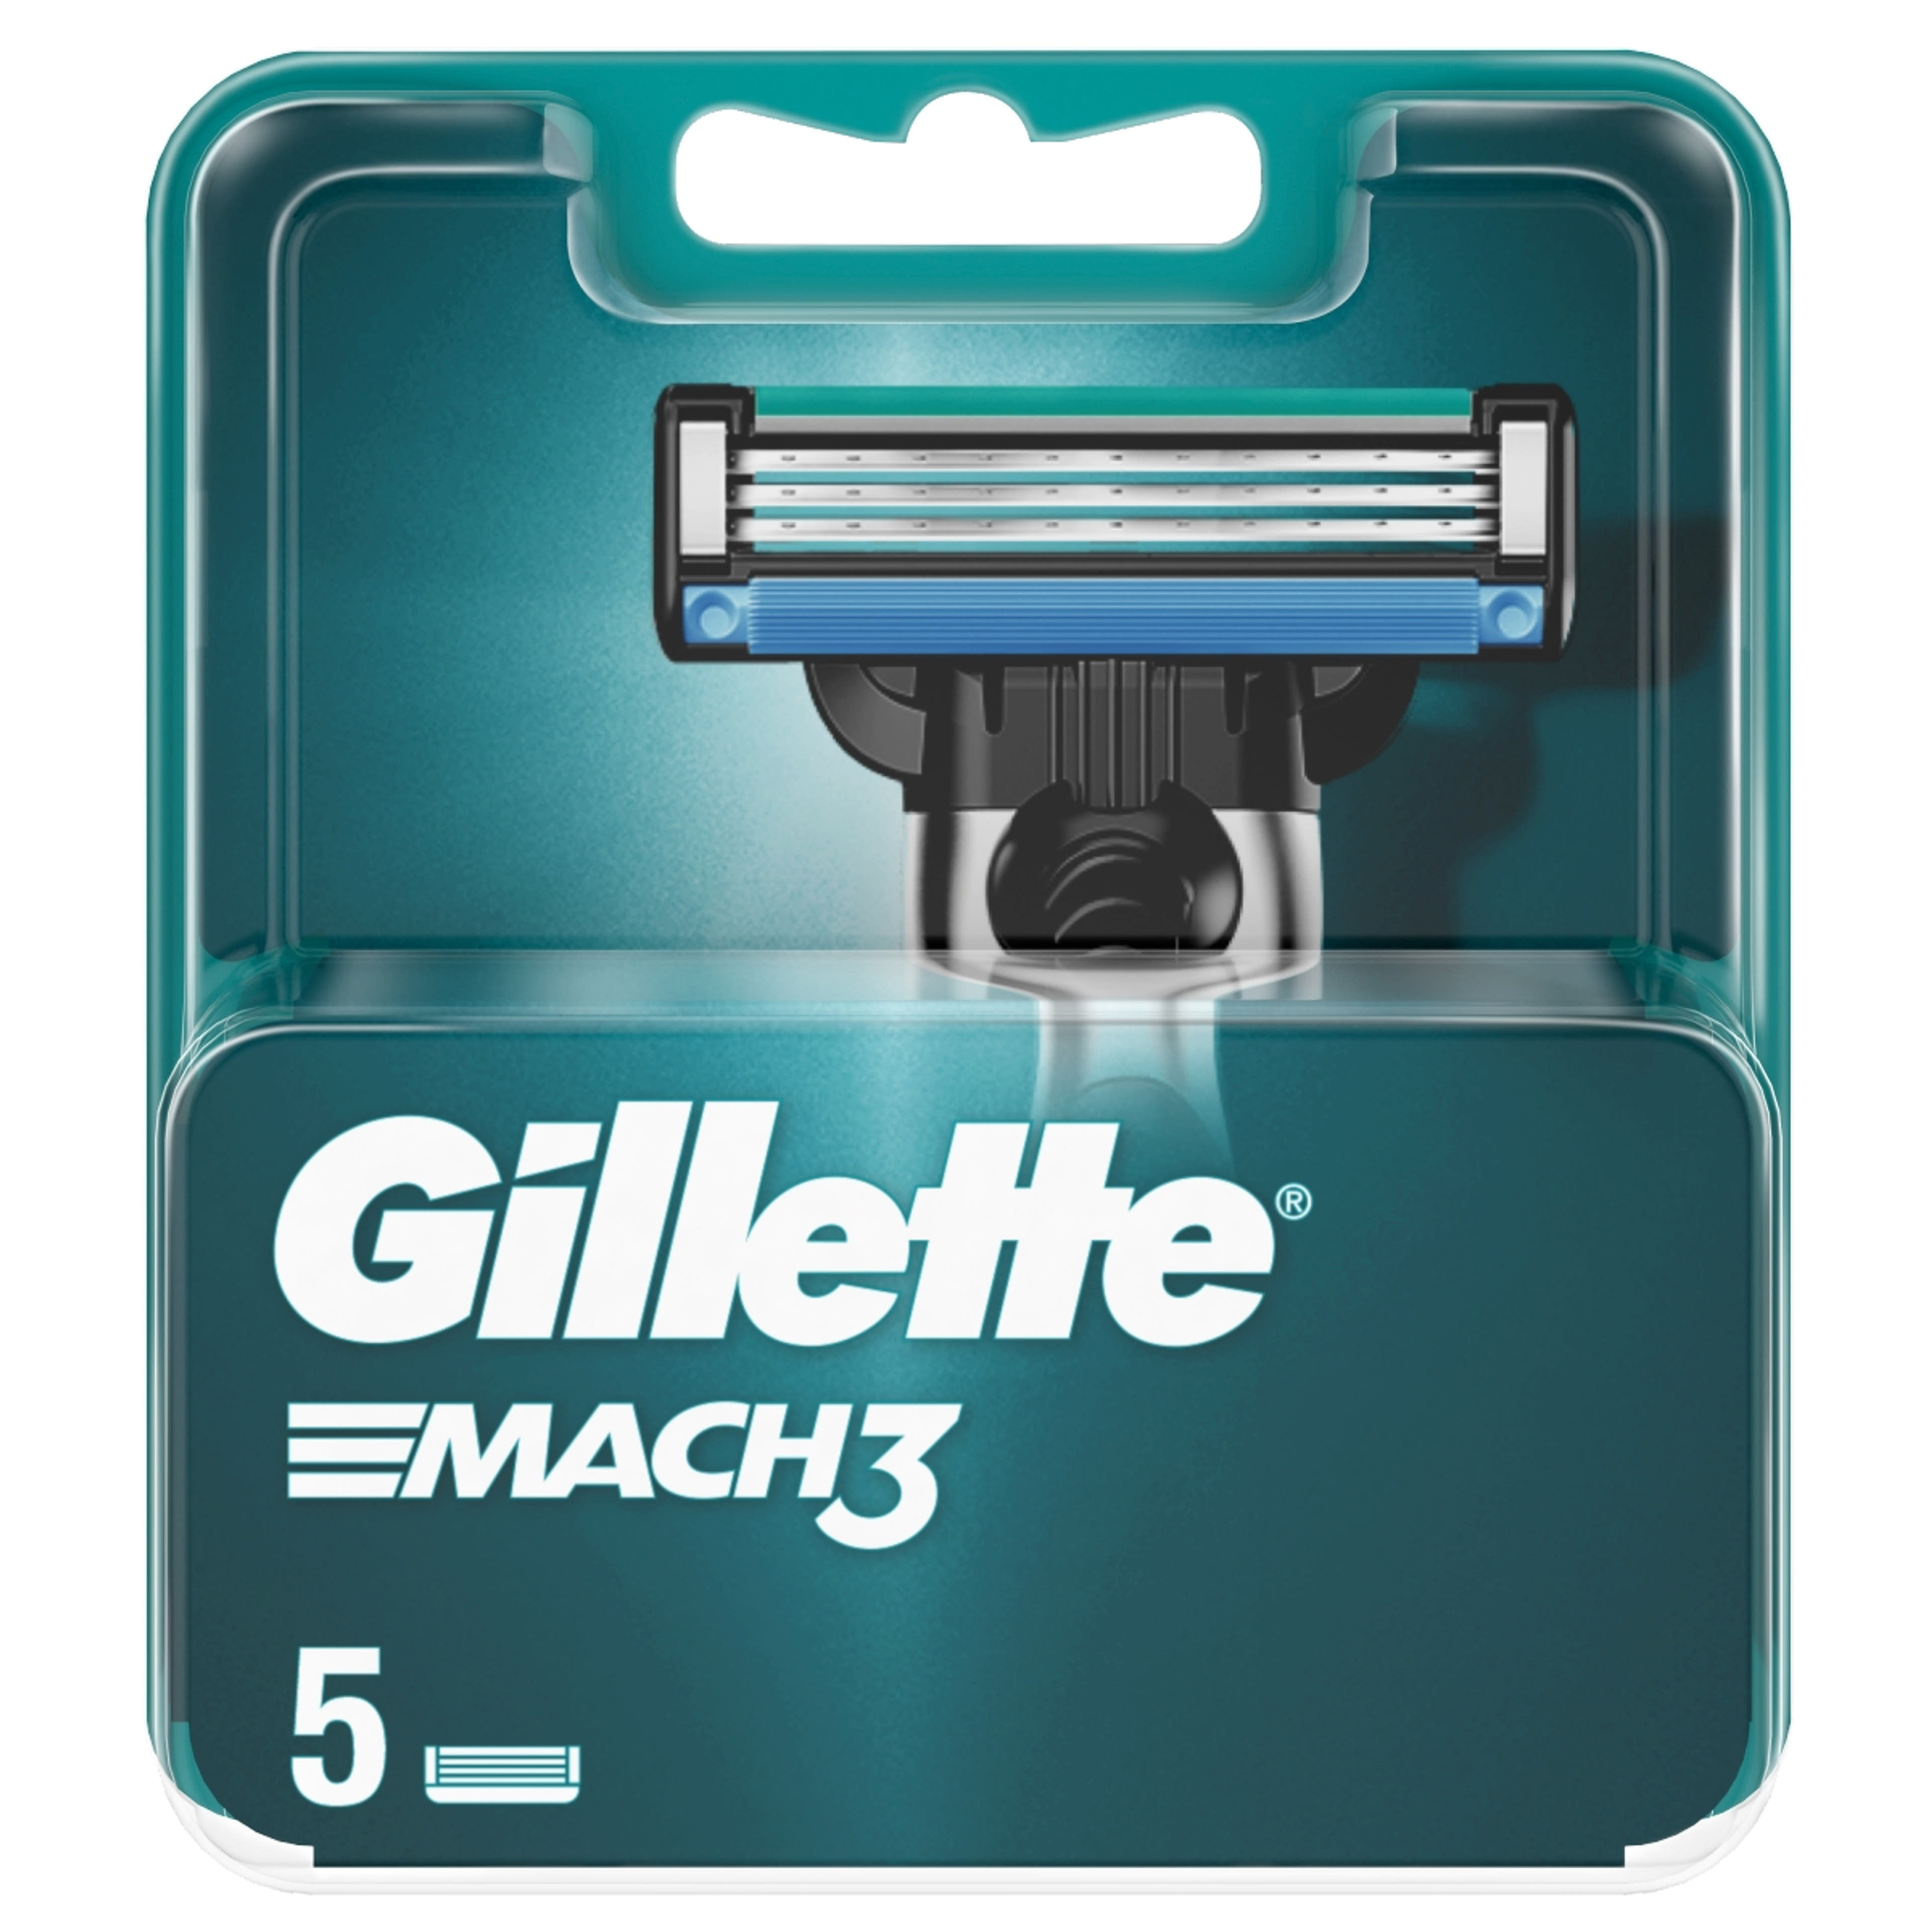 Gillette Mach 3 borotvabetét - 5 db-1